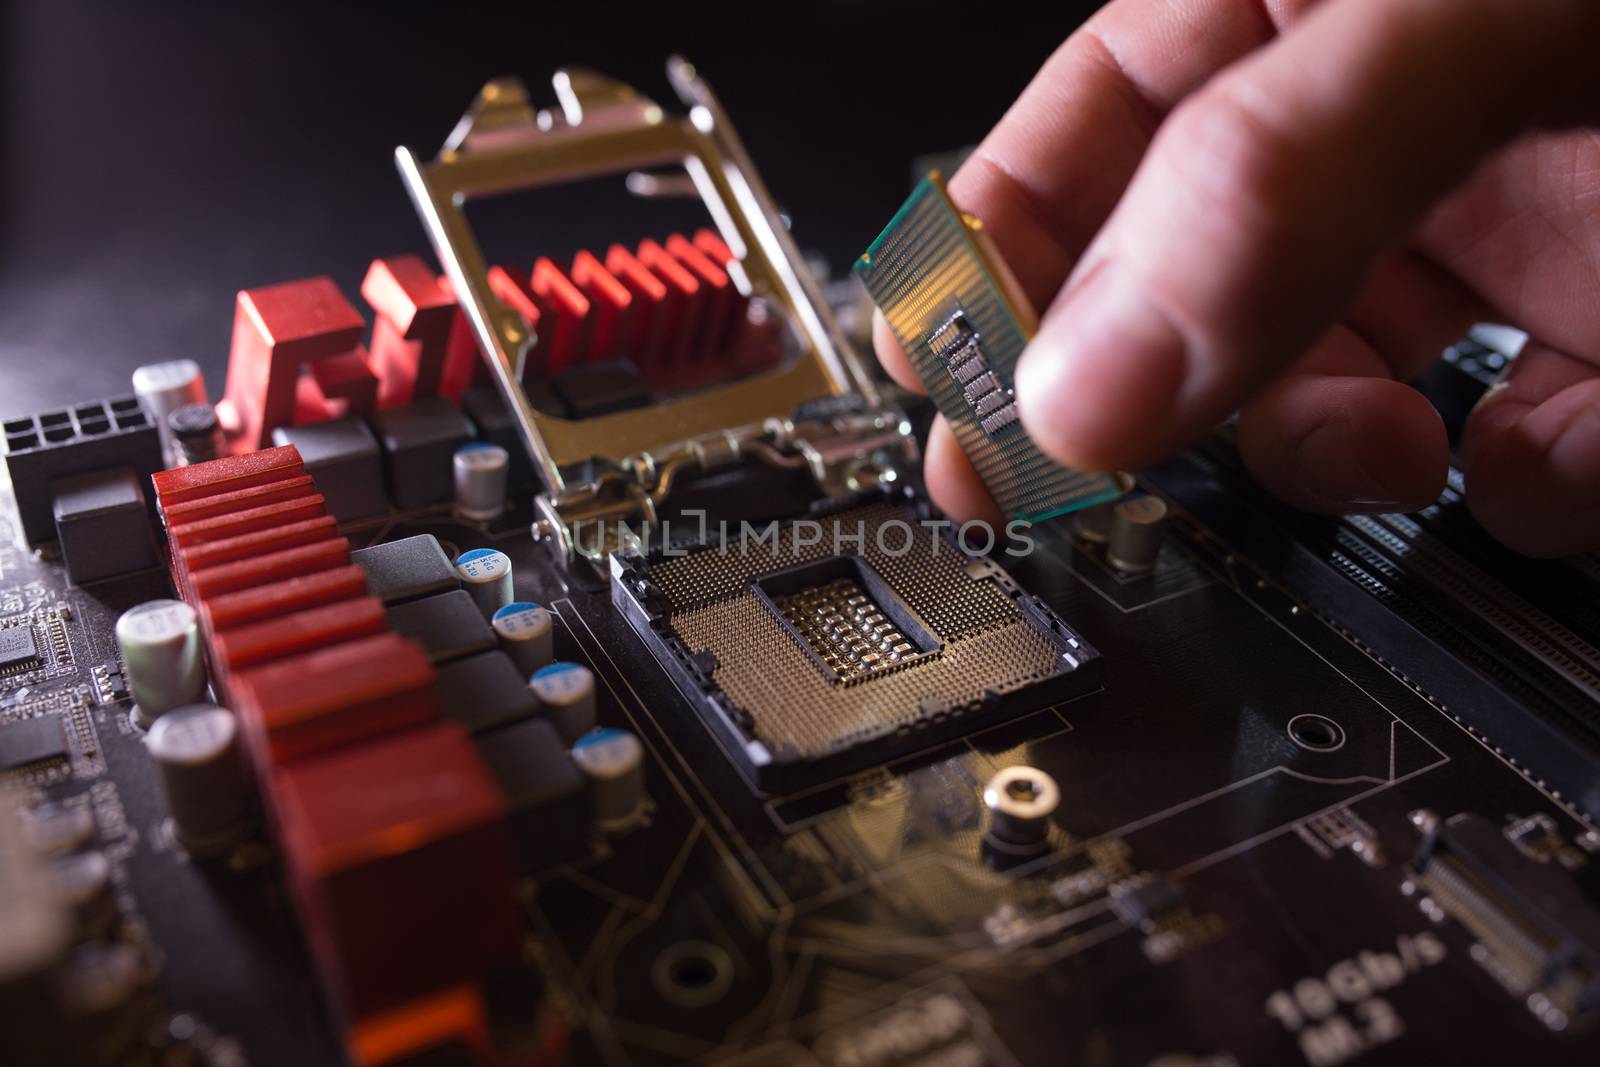 Technician plug in CPU microprocessor to motherboard socket. Workshop background